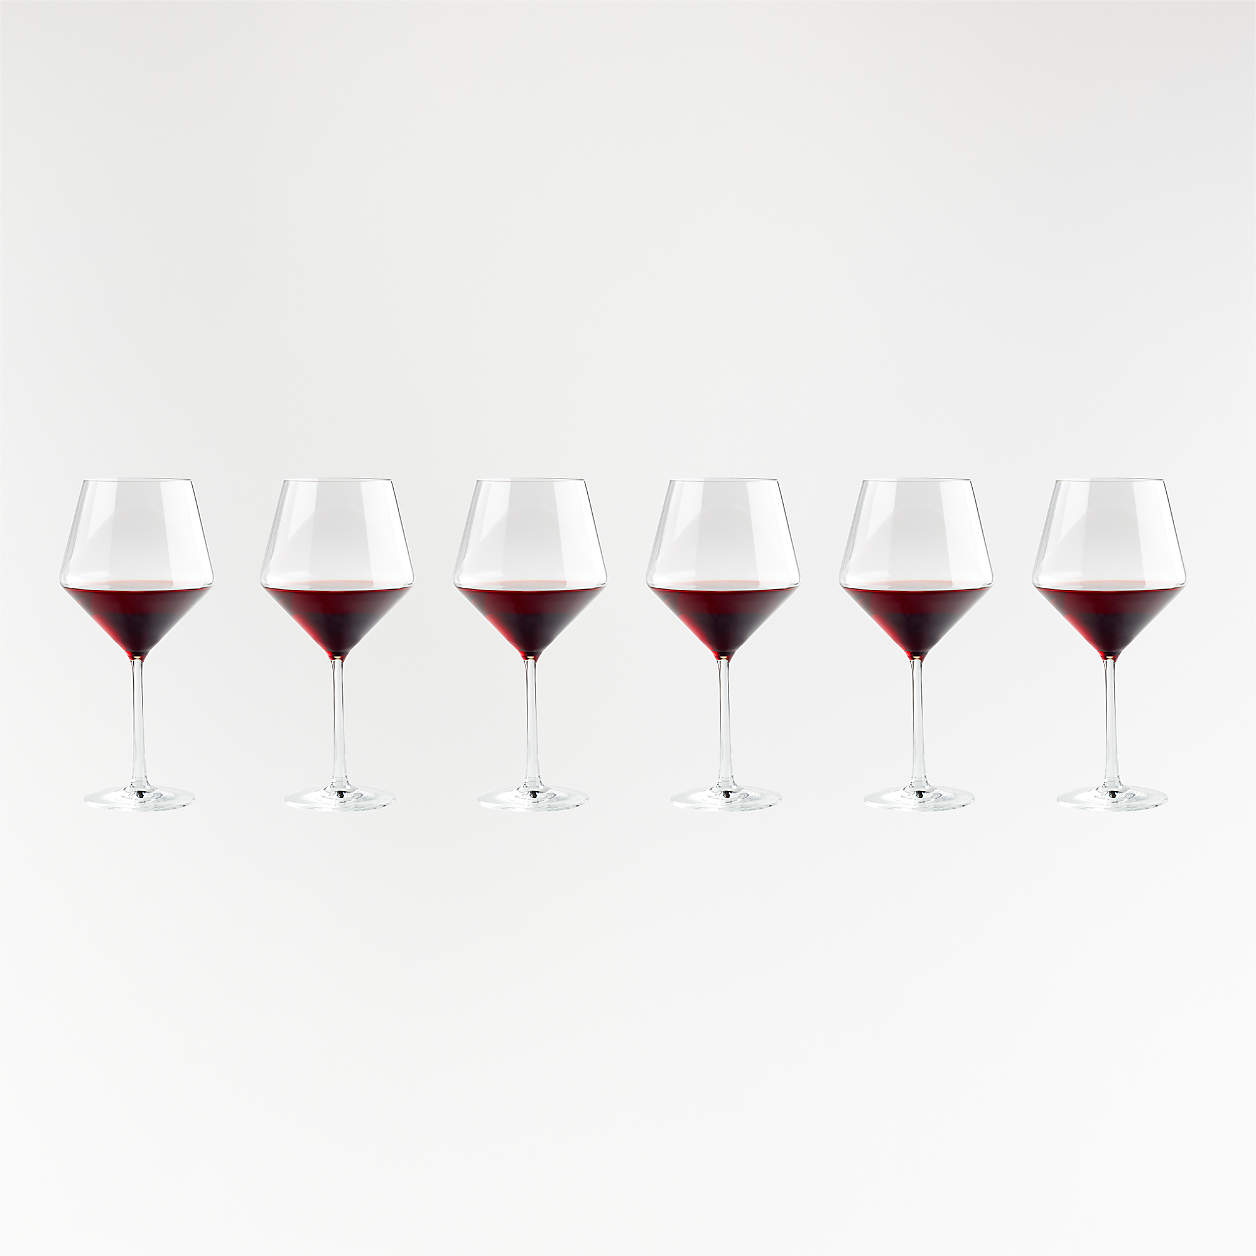 Schott Zwiesel Tour Red Wine Glasses, Set of 6